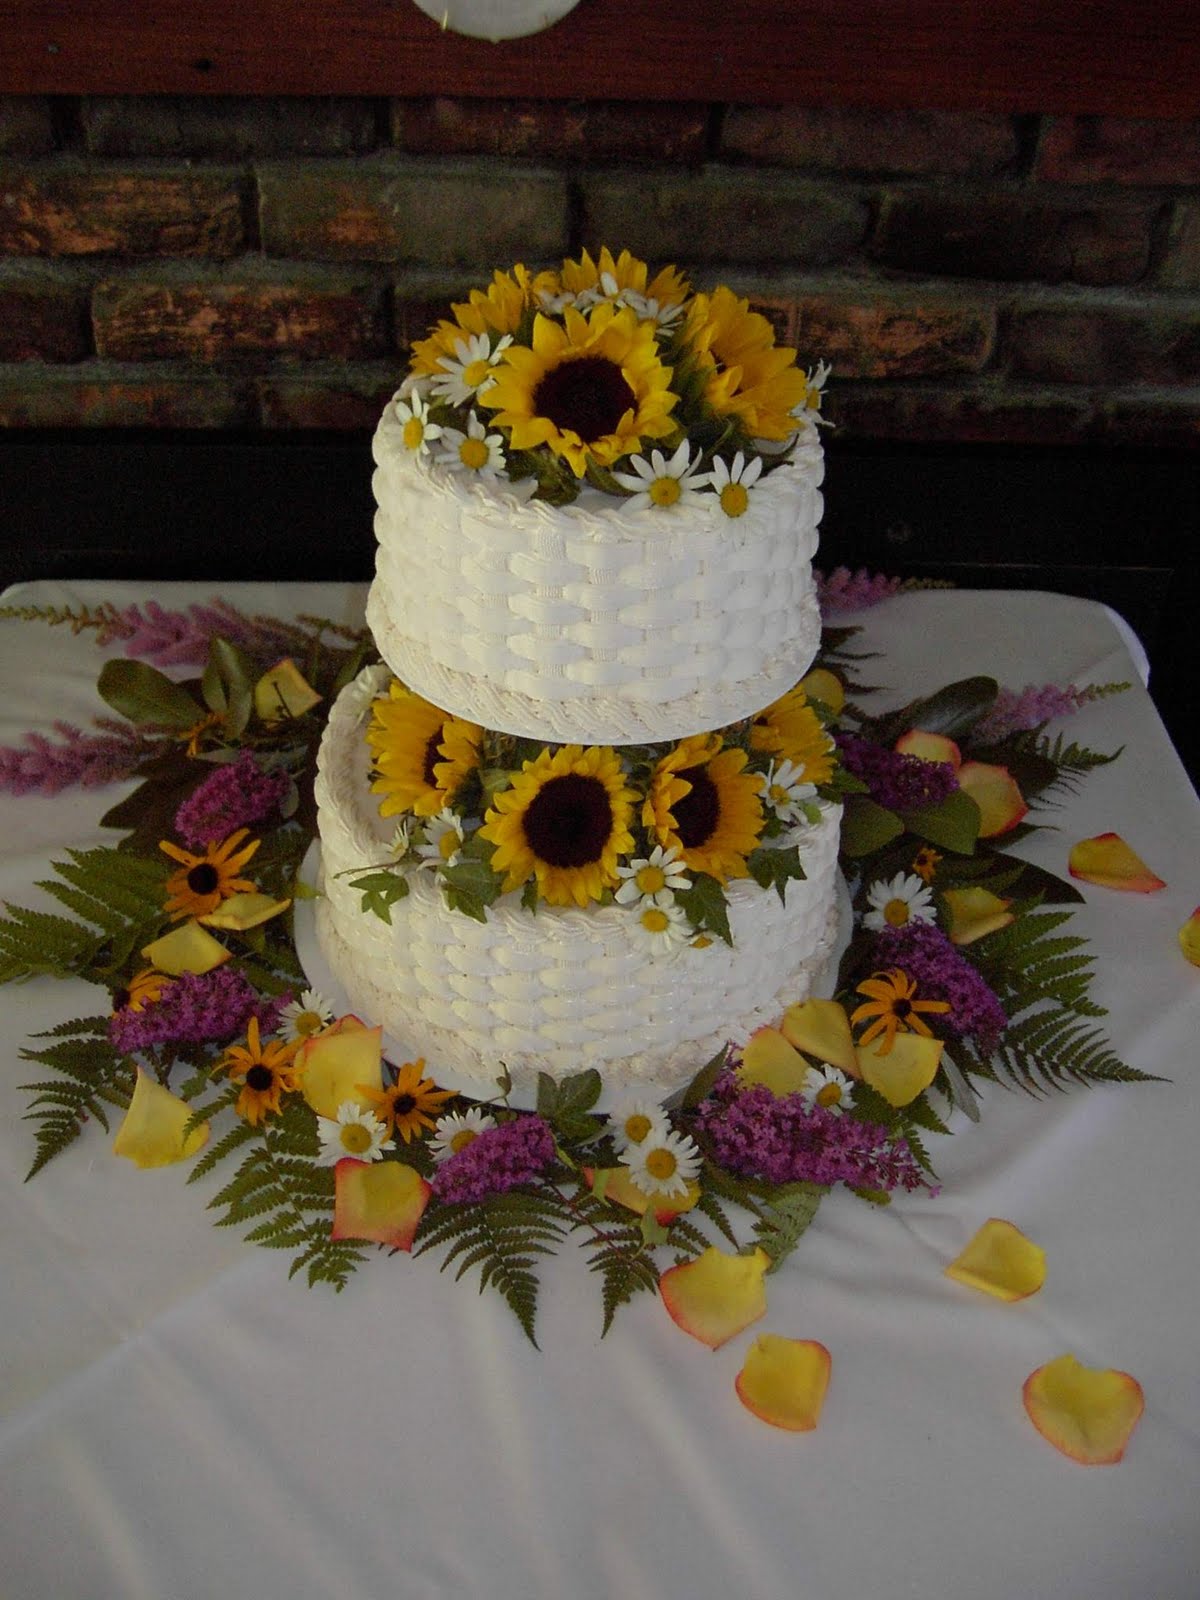  Wedding  Cakes  Pictures Sunflower  Wedding  Cakes 